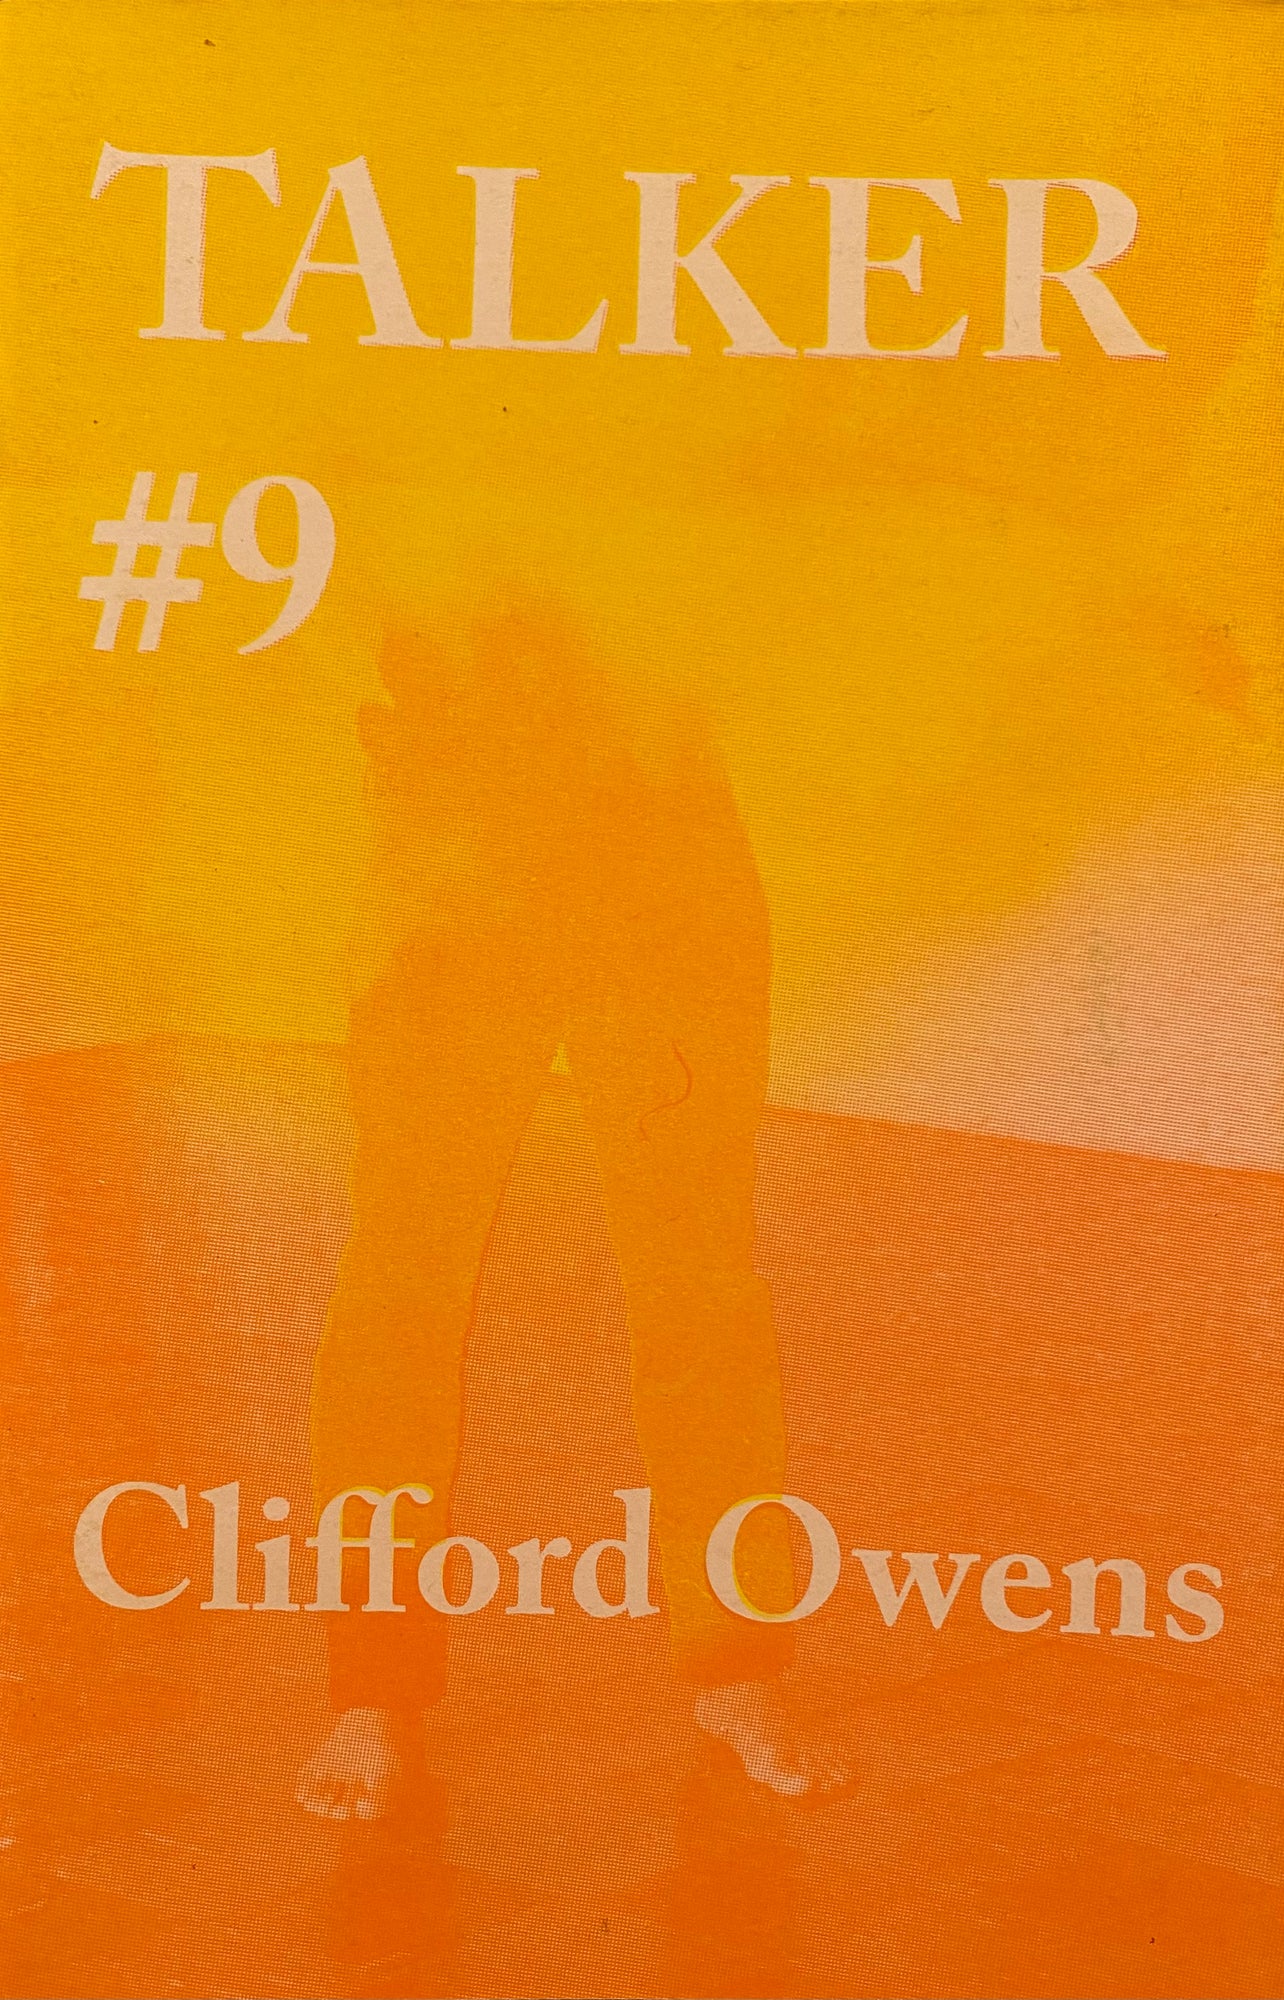 Talker #9 Clifford Owens